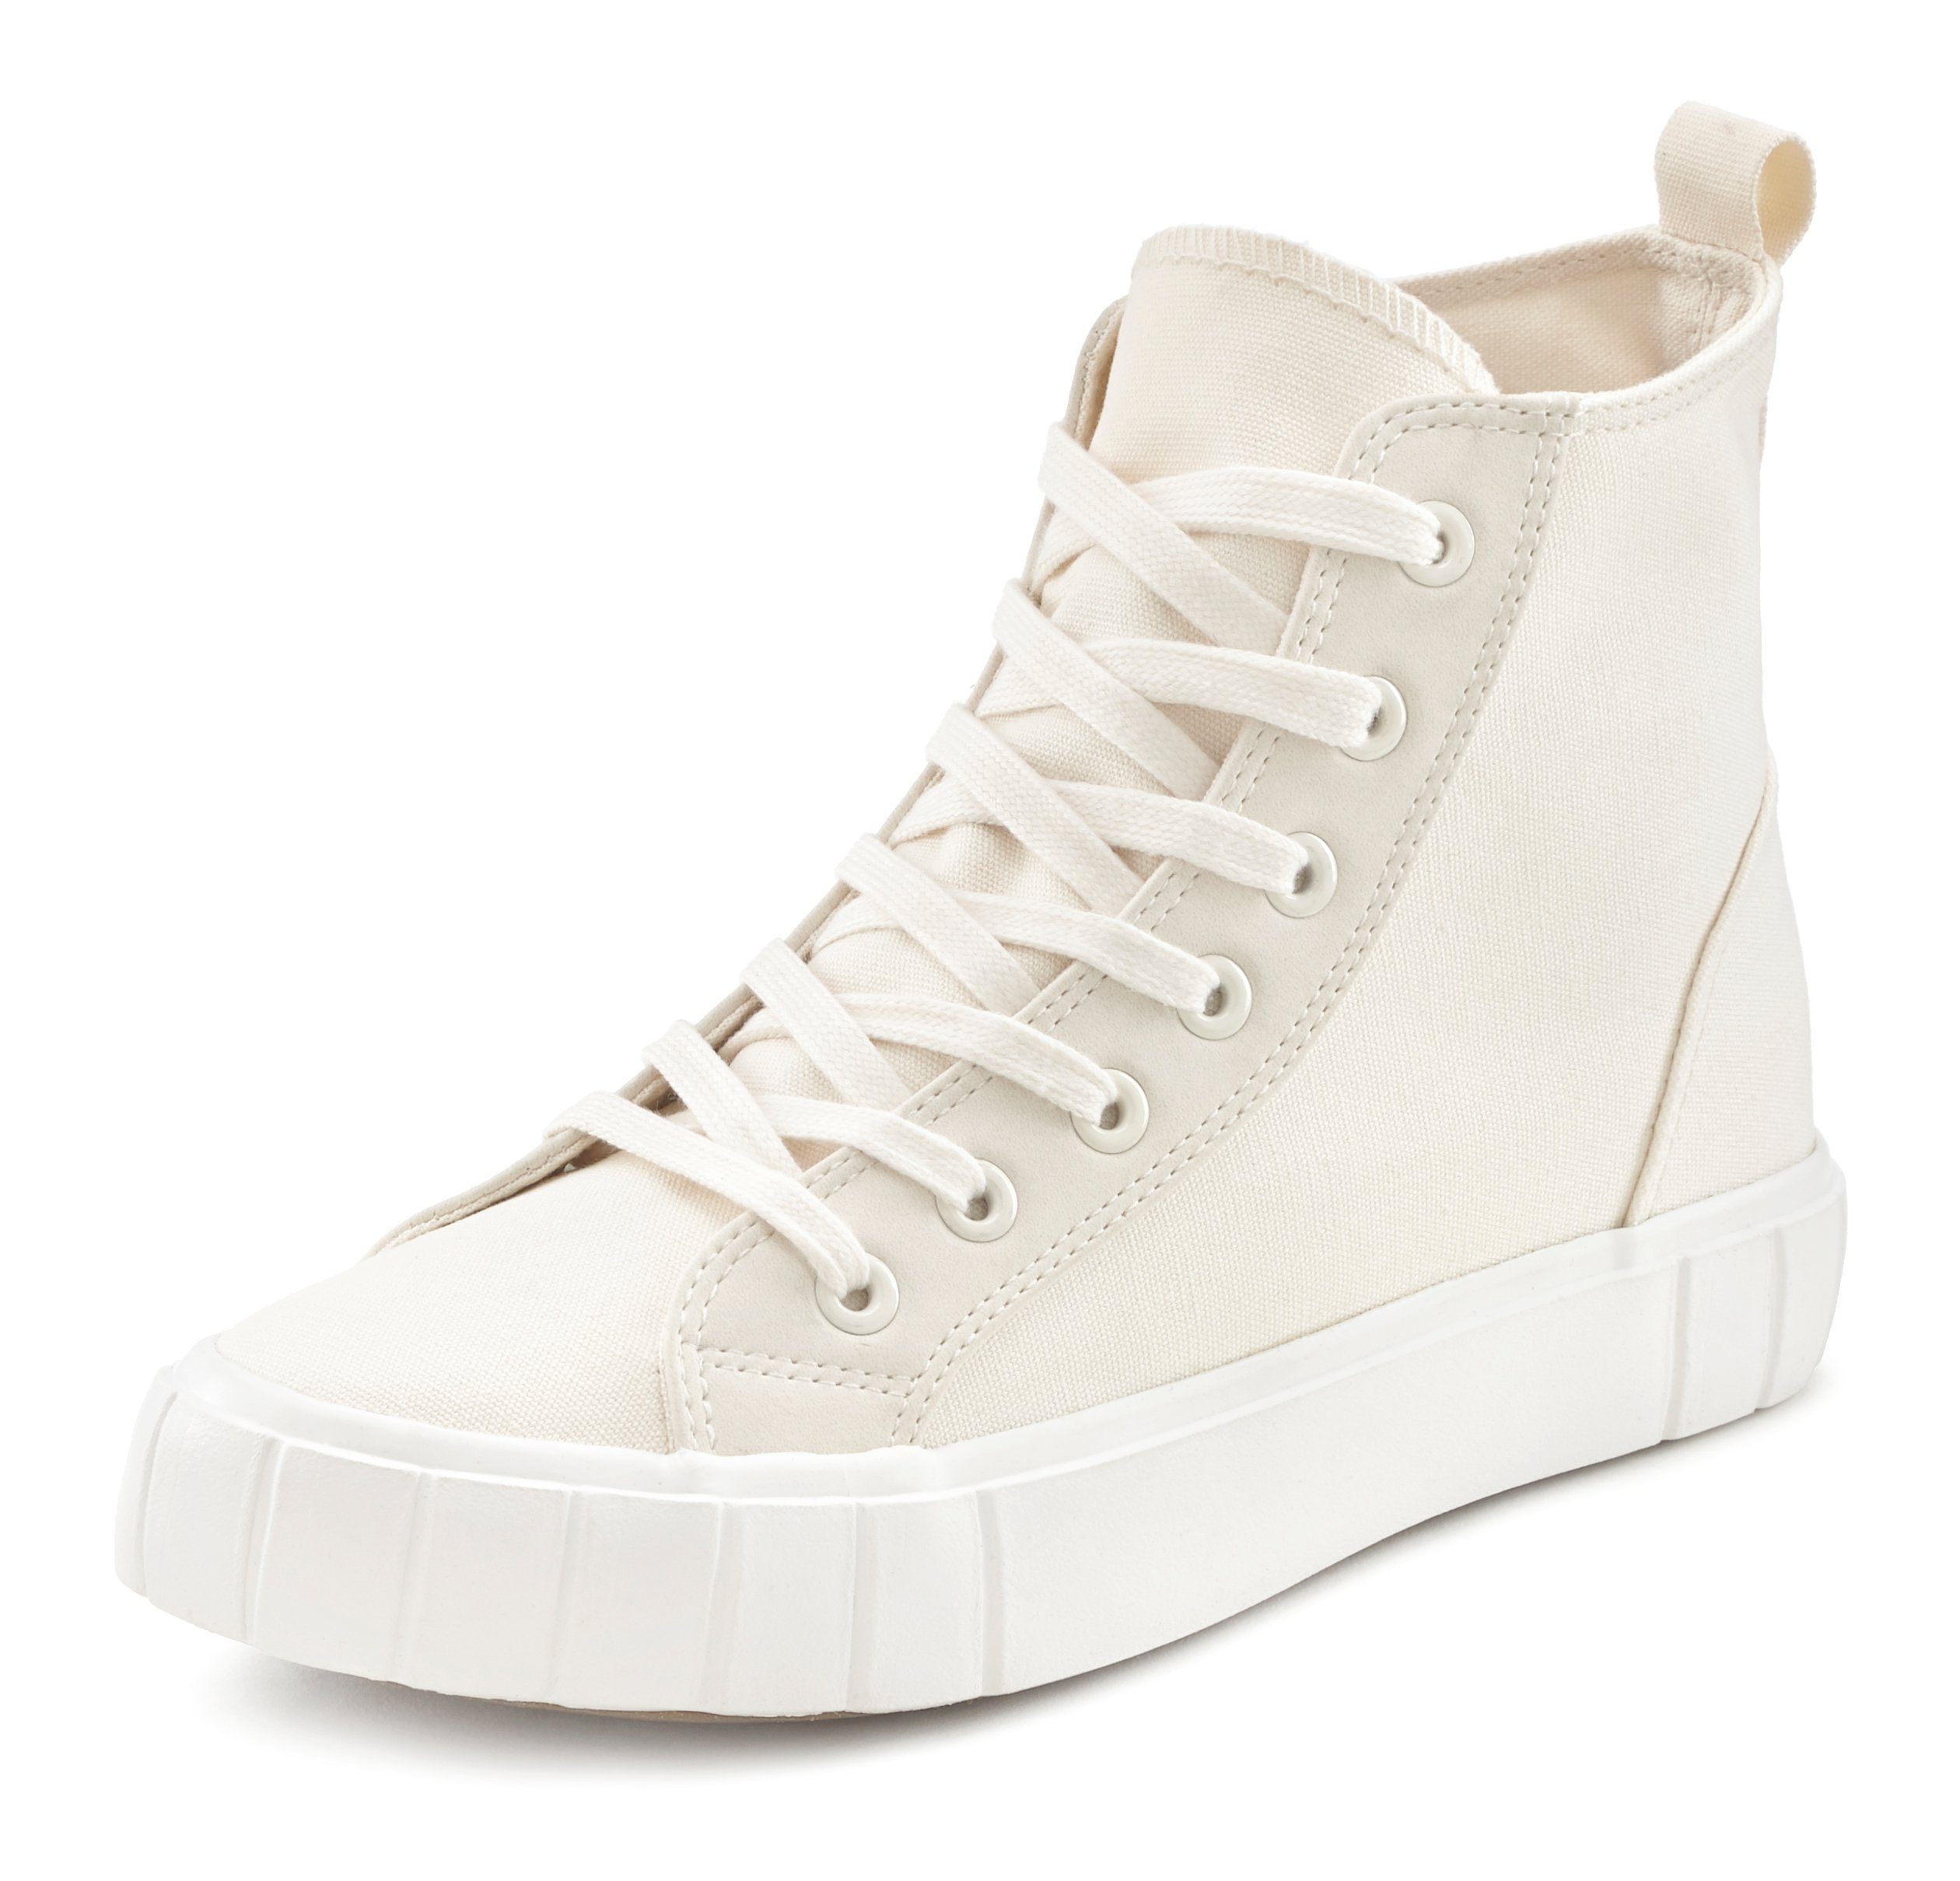 Schuhe Sneaker Elbsand Sneaker High Top Boots aus modischem Canvas-Material mit kleiner Plateausohle vegan